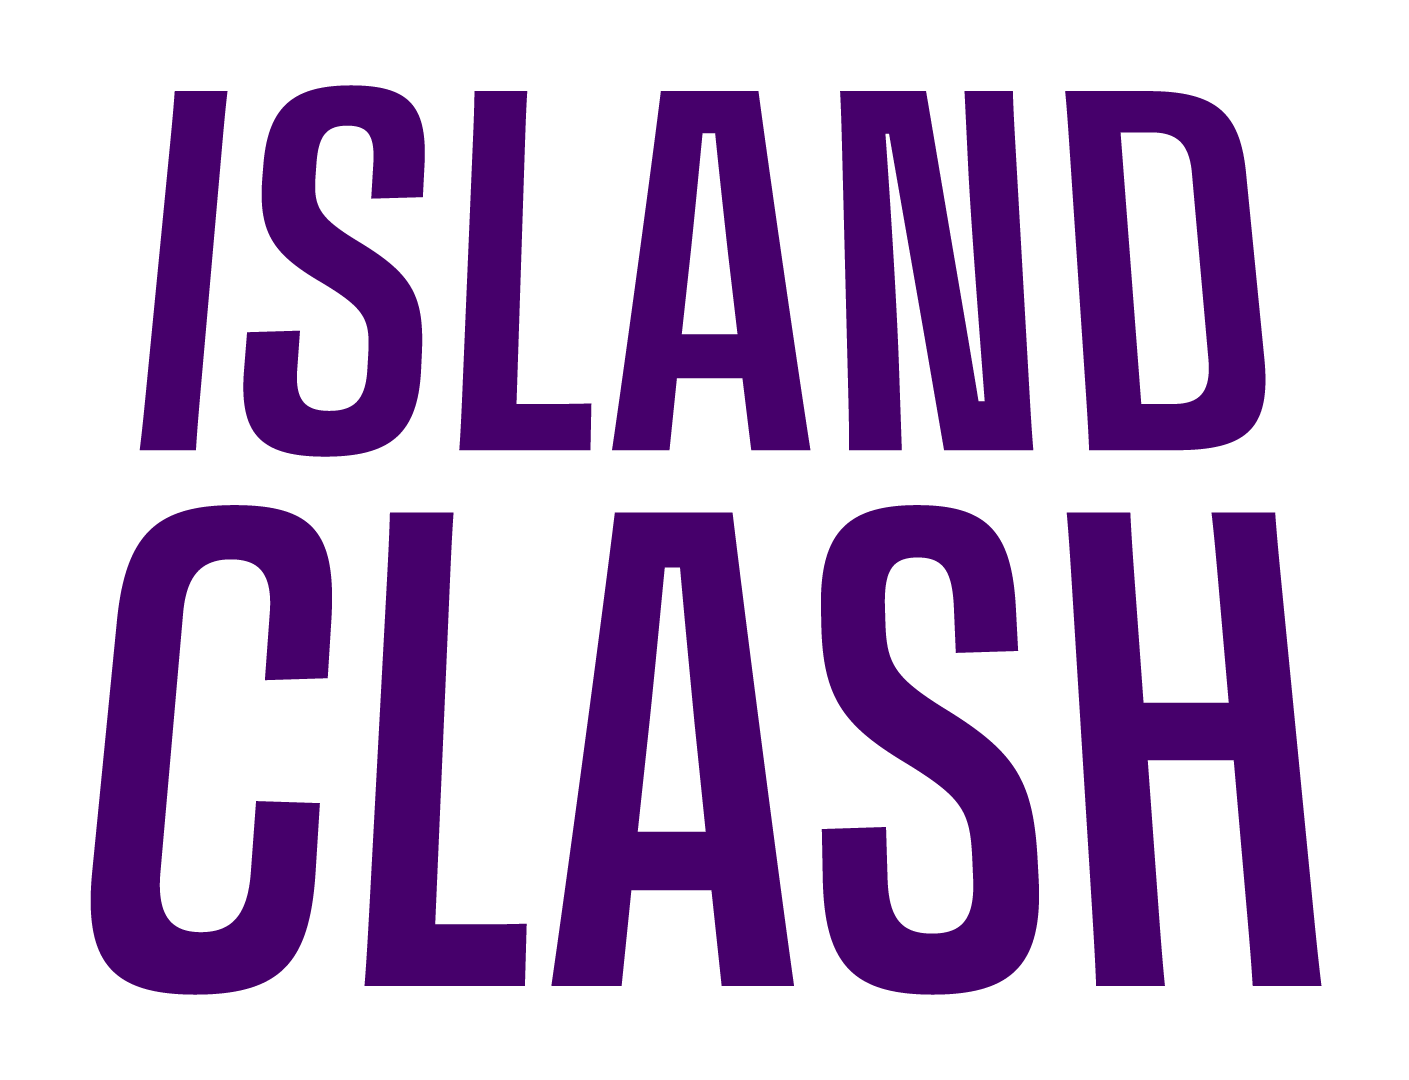 ISLAND CLASH